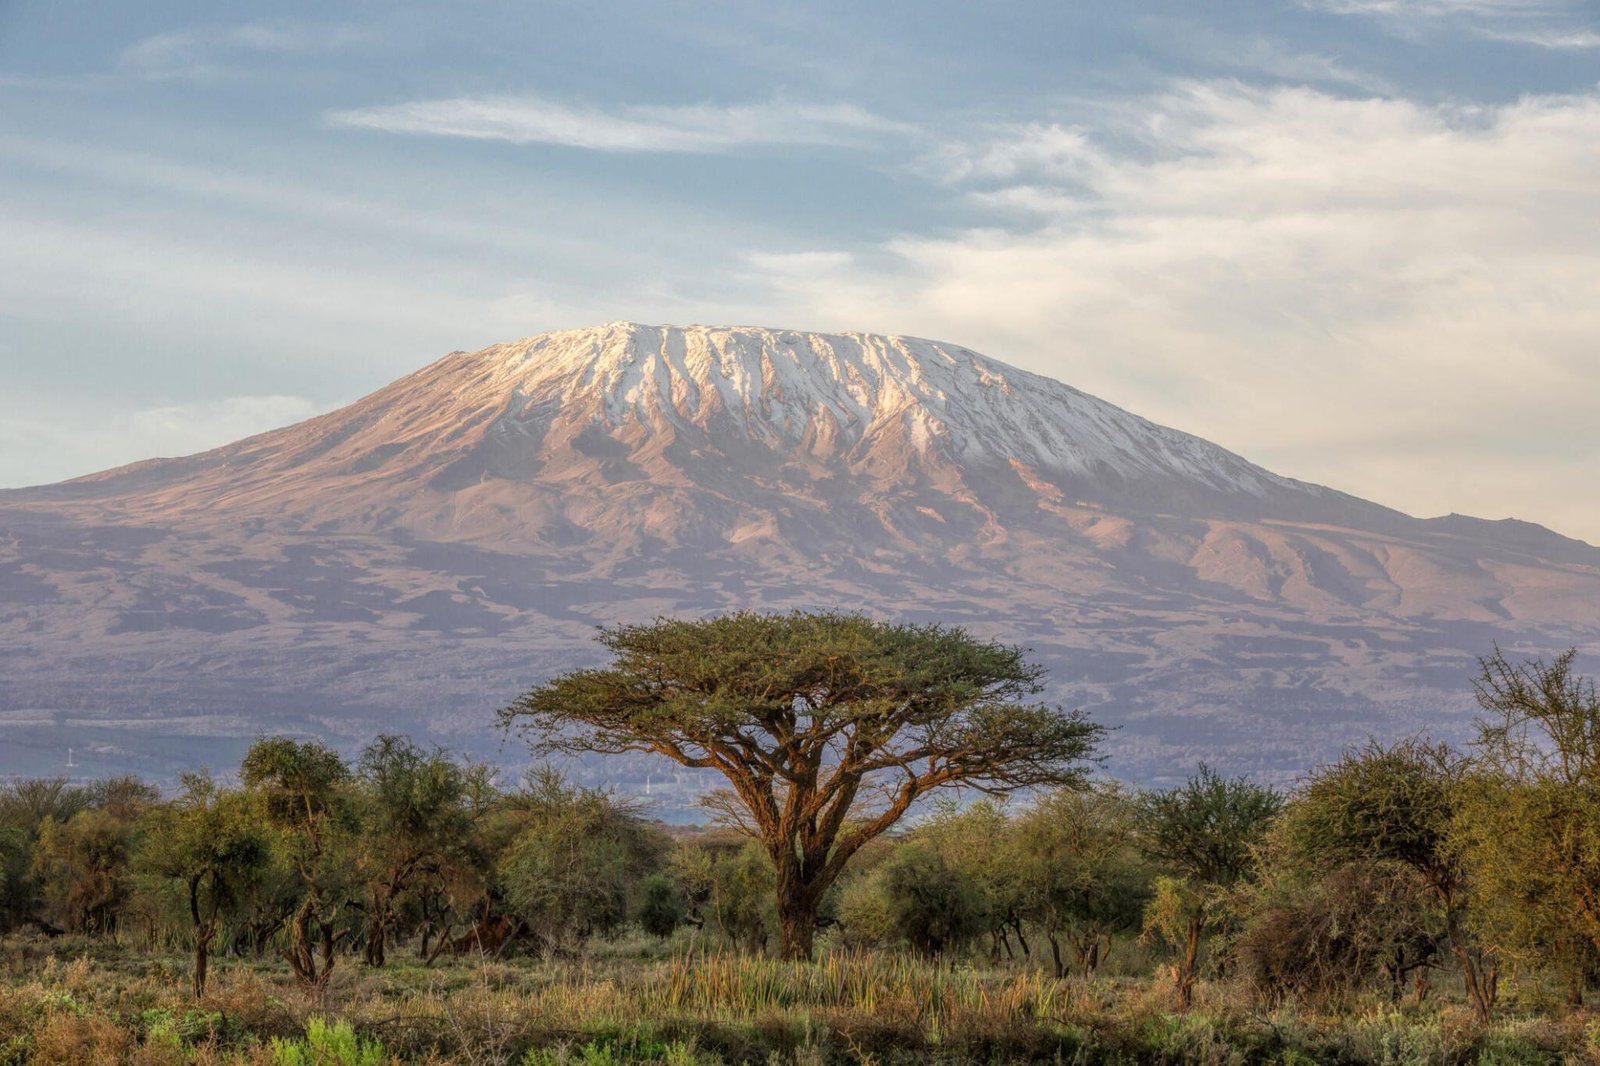 How Safe is Climbing Mount Kilimanjaro?